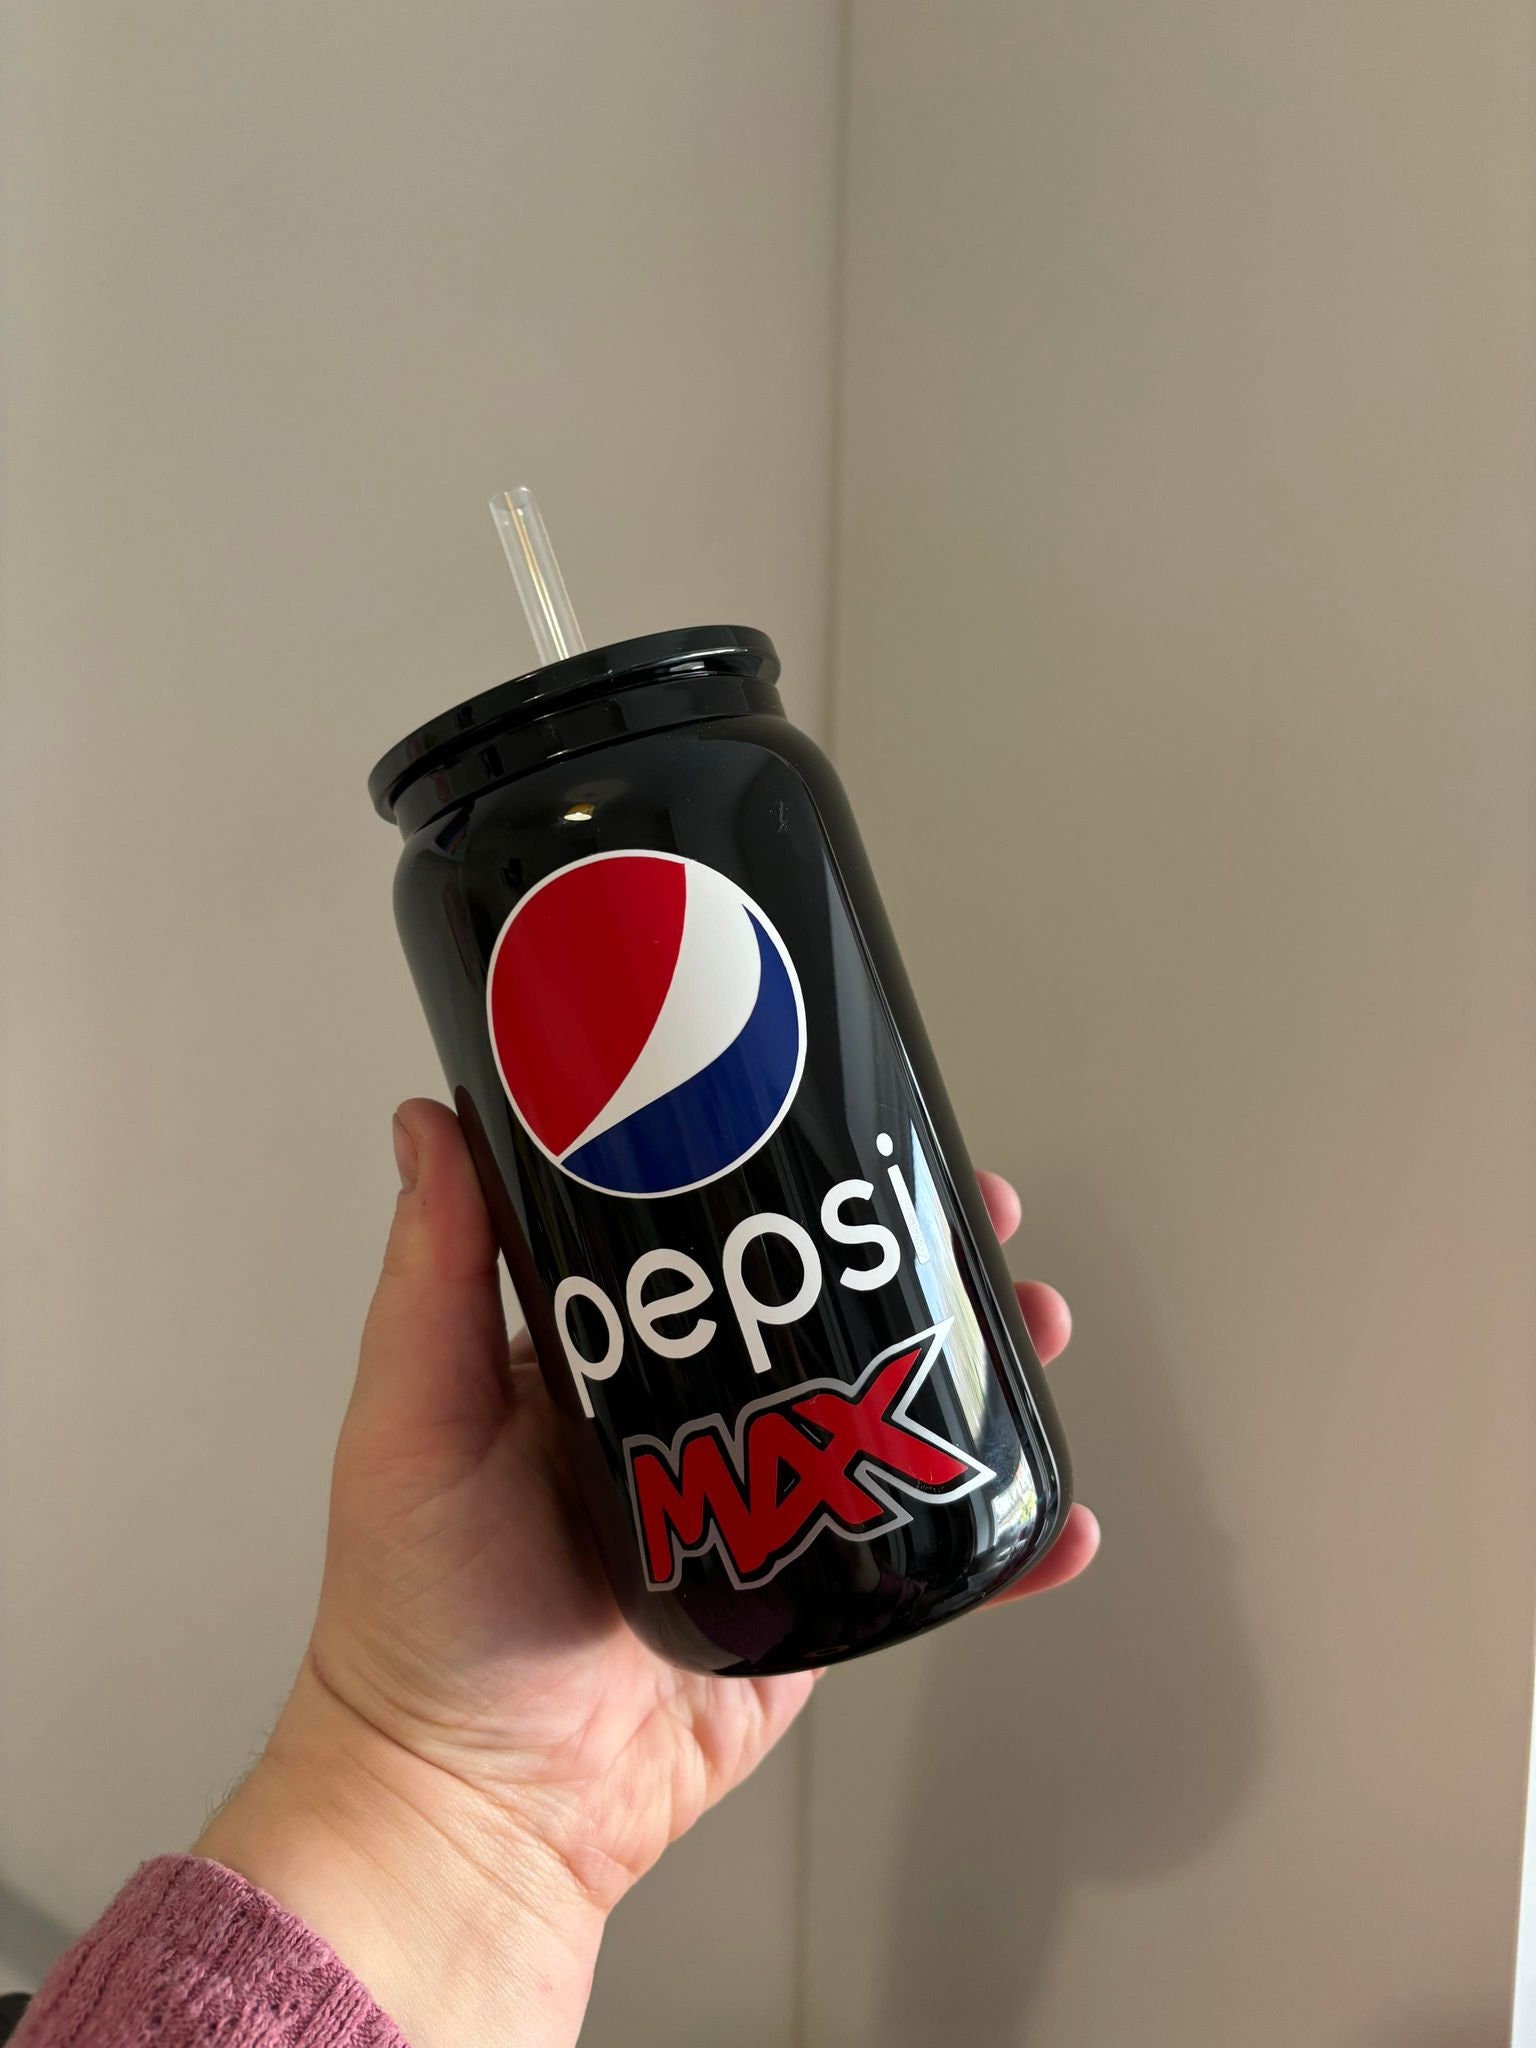 Pepsi Max Mango (Czech Republic)